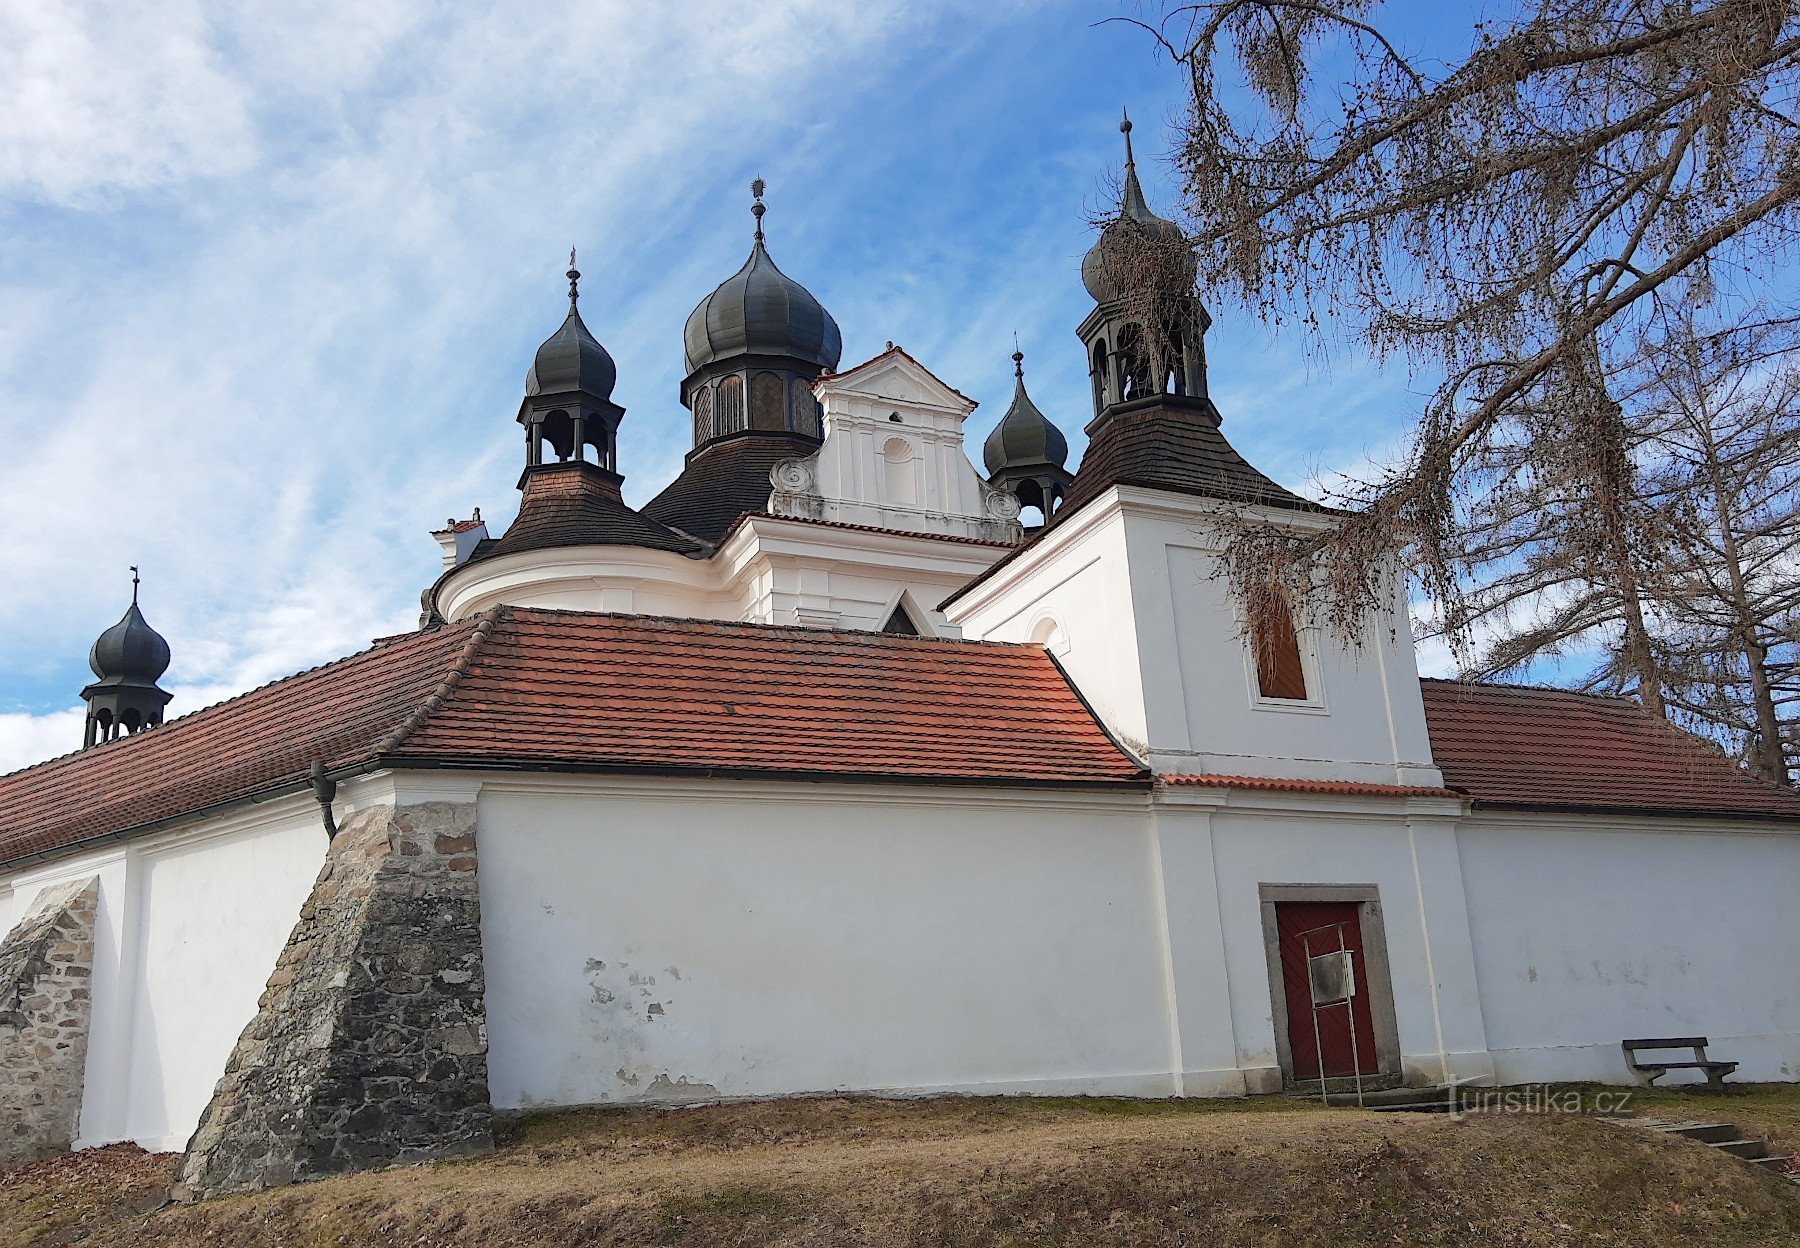 Trhové Sviny - peregrinação Barroca Igreja da Santíssima Trindade